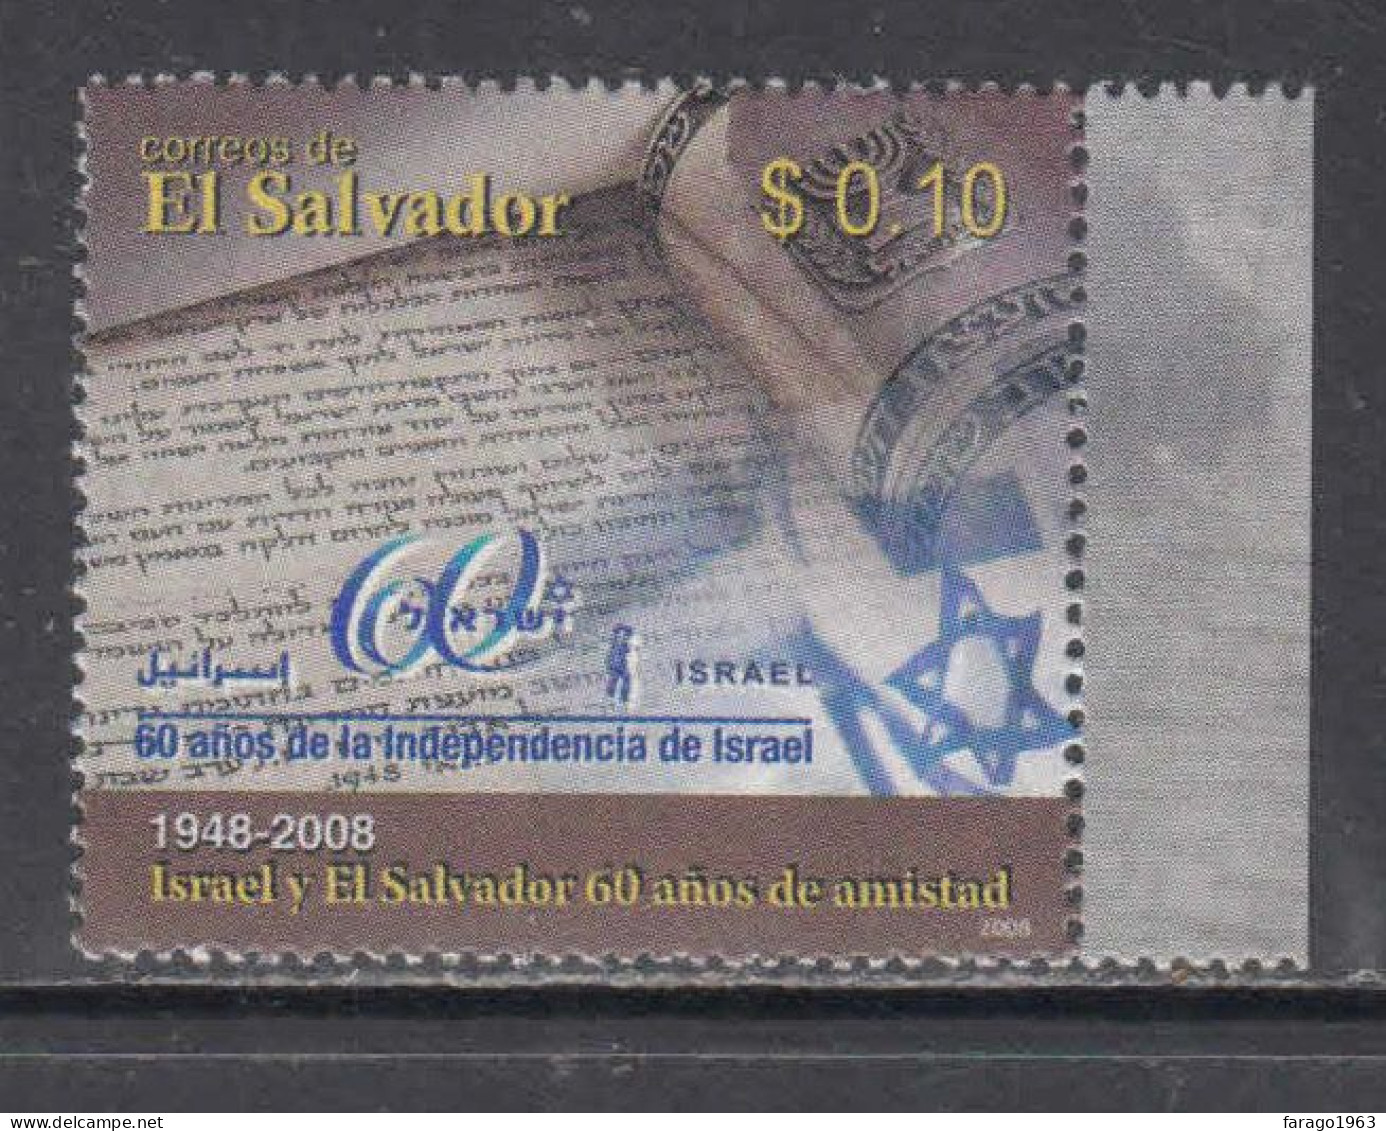 2008 El Salvador Israel Independence Flags Complete Set Of 1 MNH - Salvador